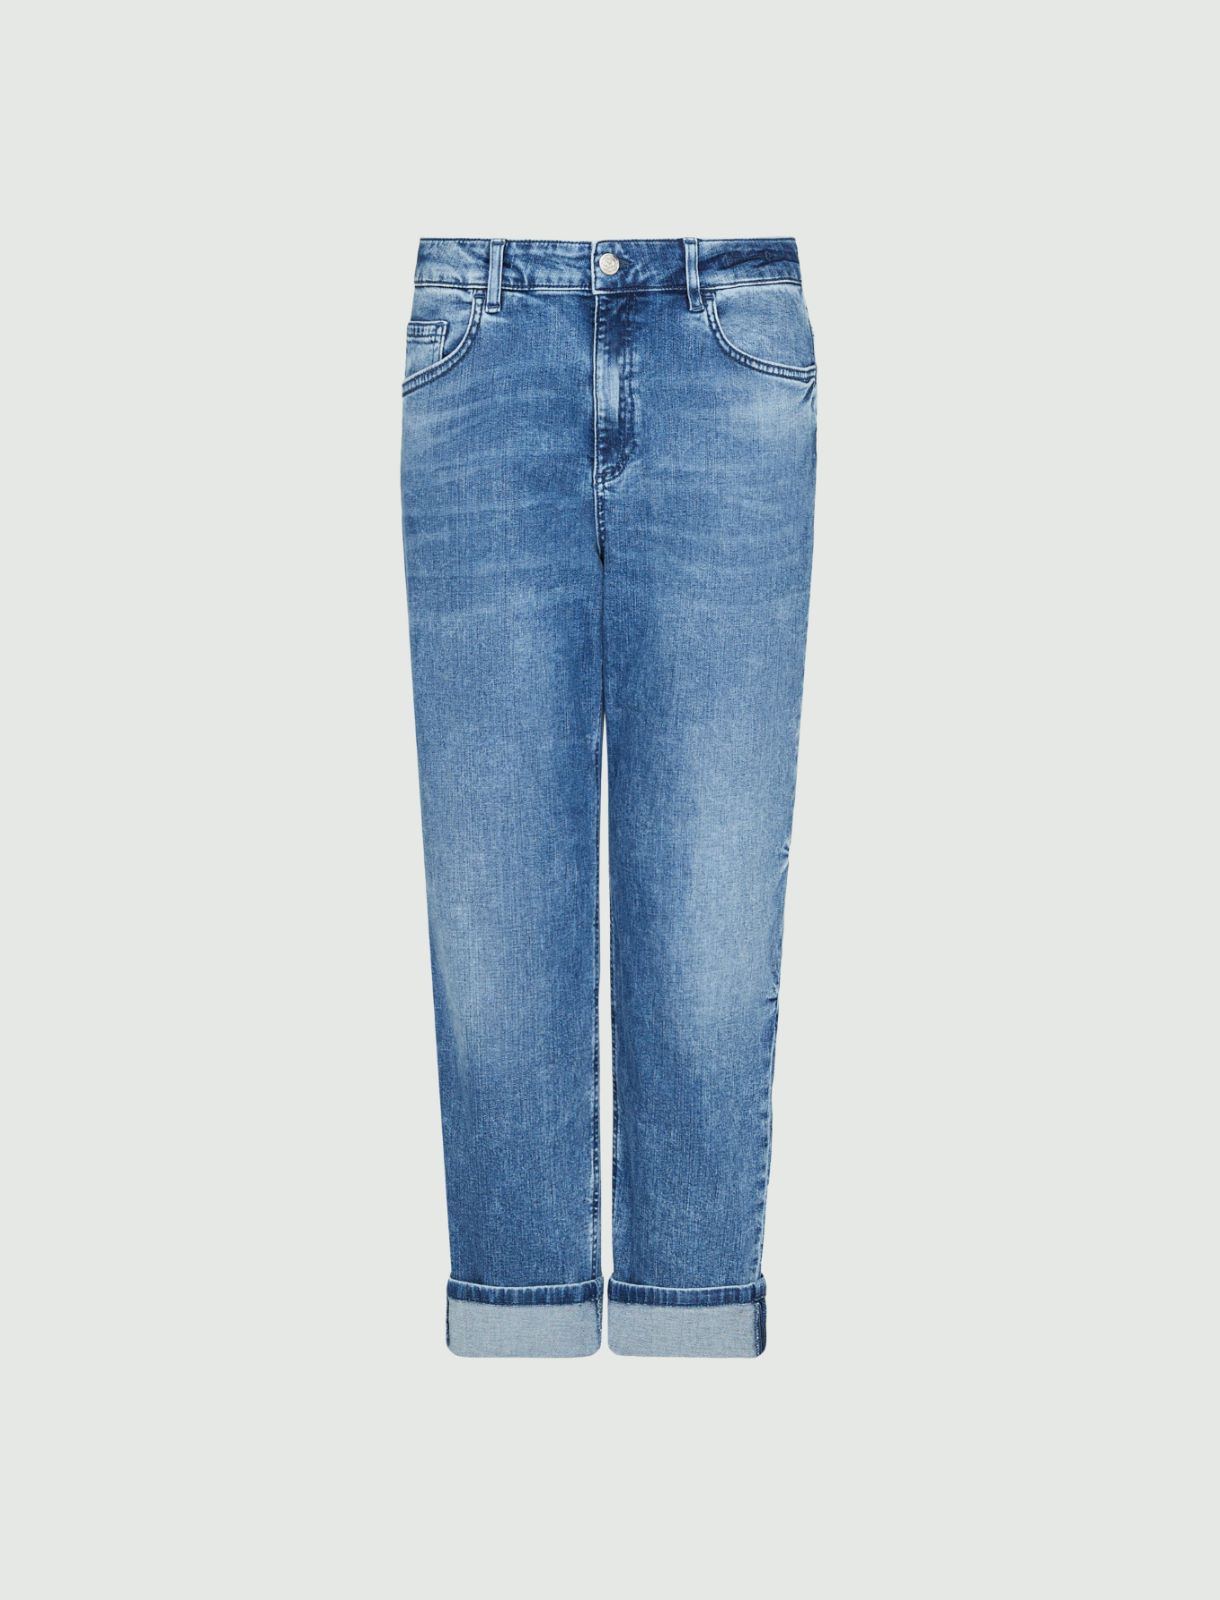 Tomboy jeans, blue jeans | Marella